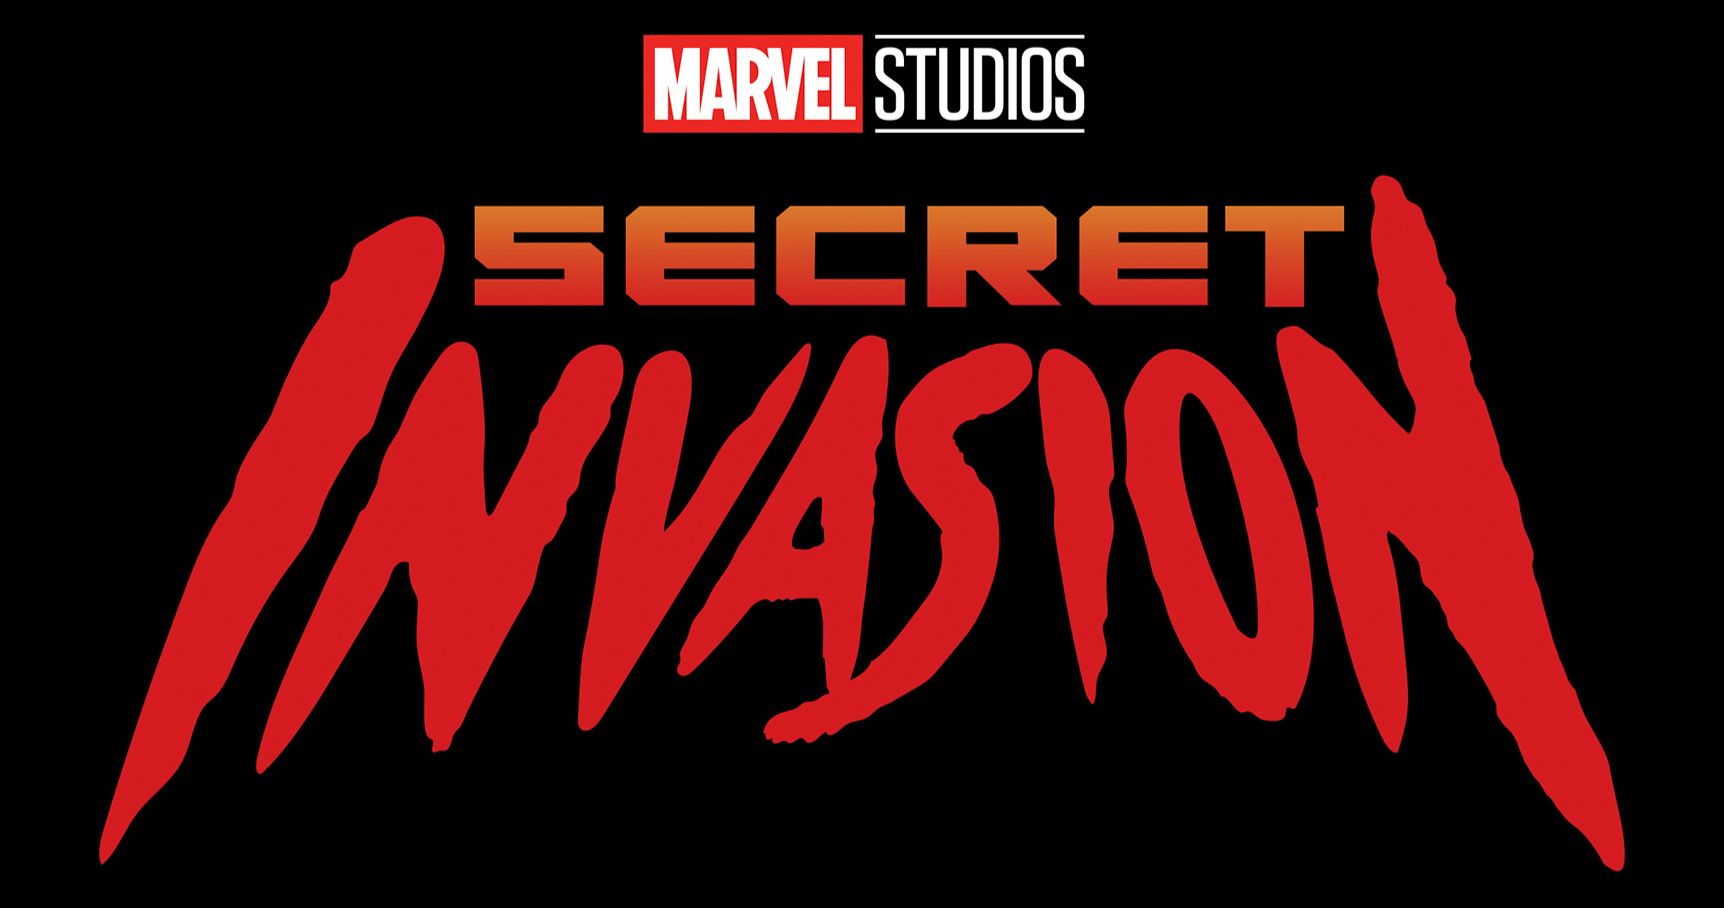 Secret Invasion Disney+ Series Announced with Samuel L. Jackson Returning as Nick Fury